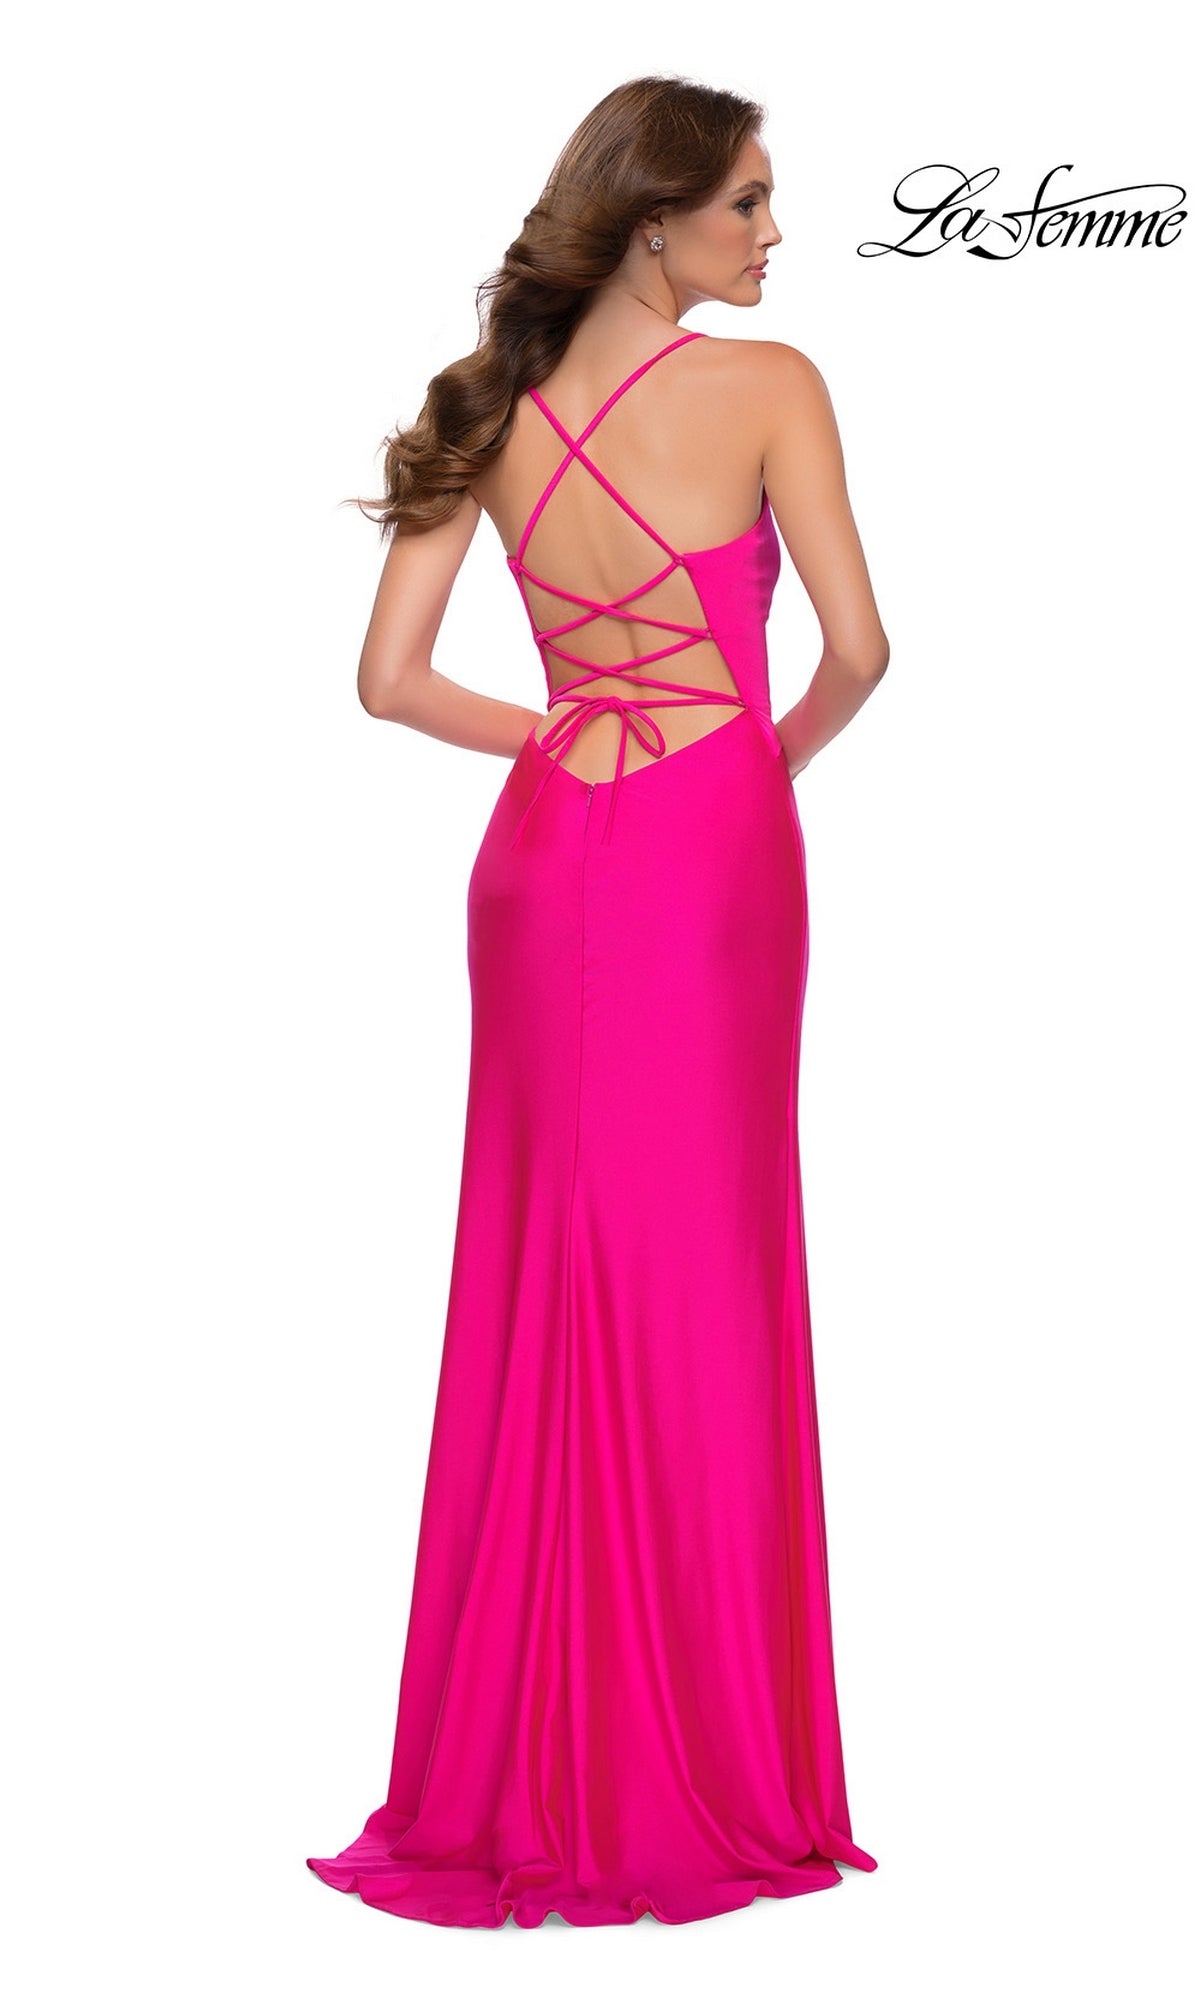  La Femme 29870 Formal Prom Dress